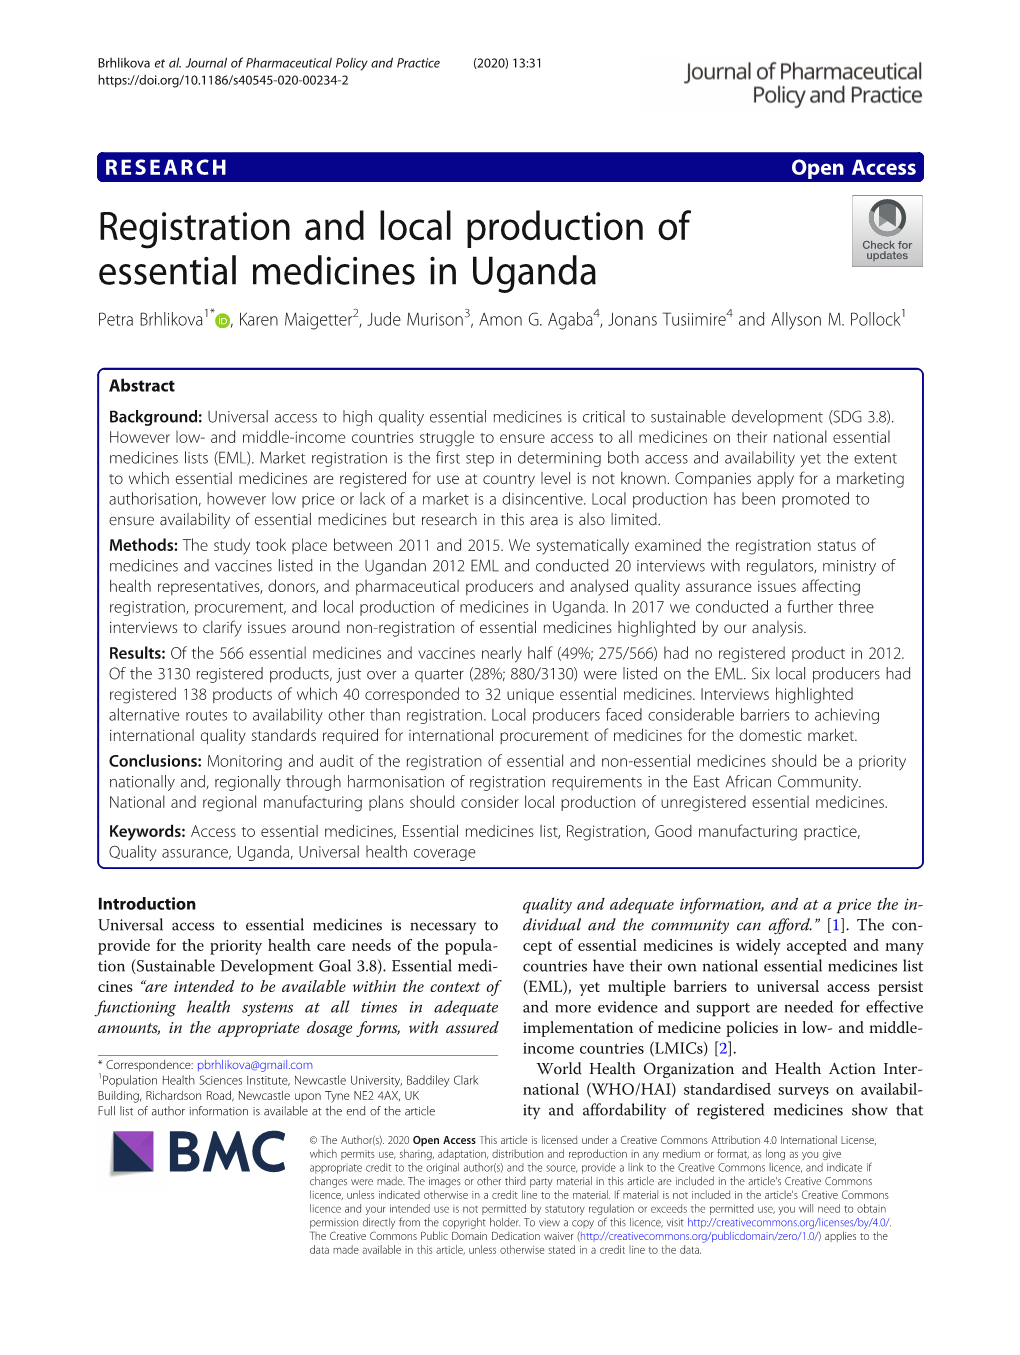 Registration and Local Production of Essential Medicines in Uganda Petra Brhlikova1* , Karen Maigetter2, Jude Murison3, Amon G